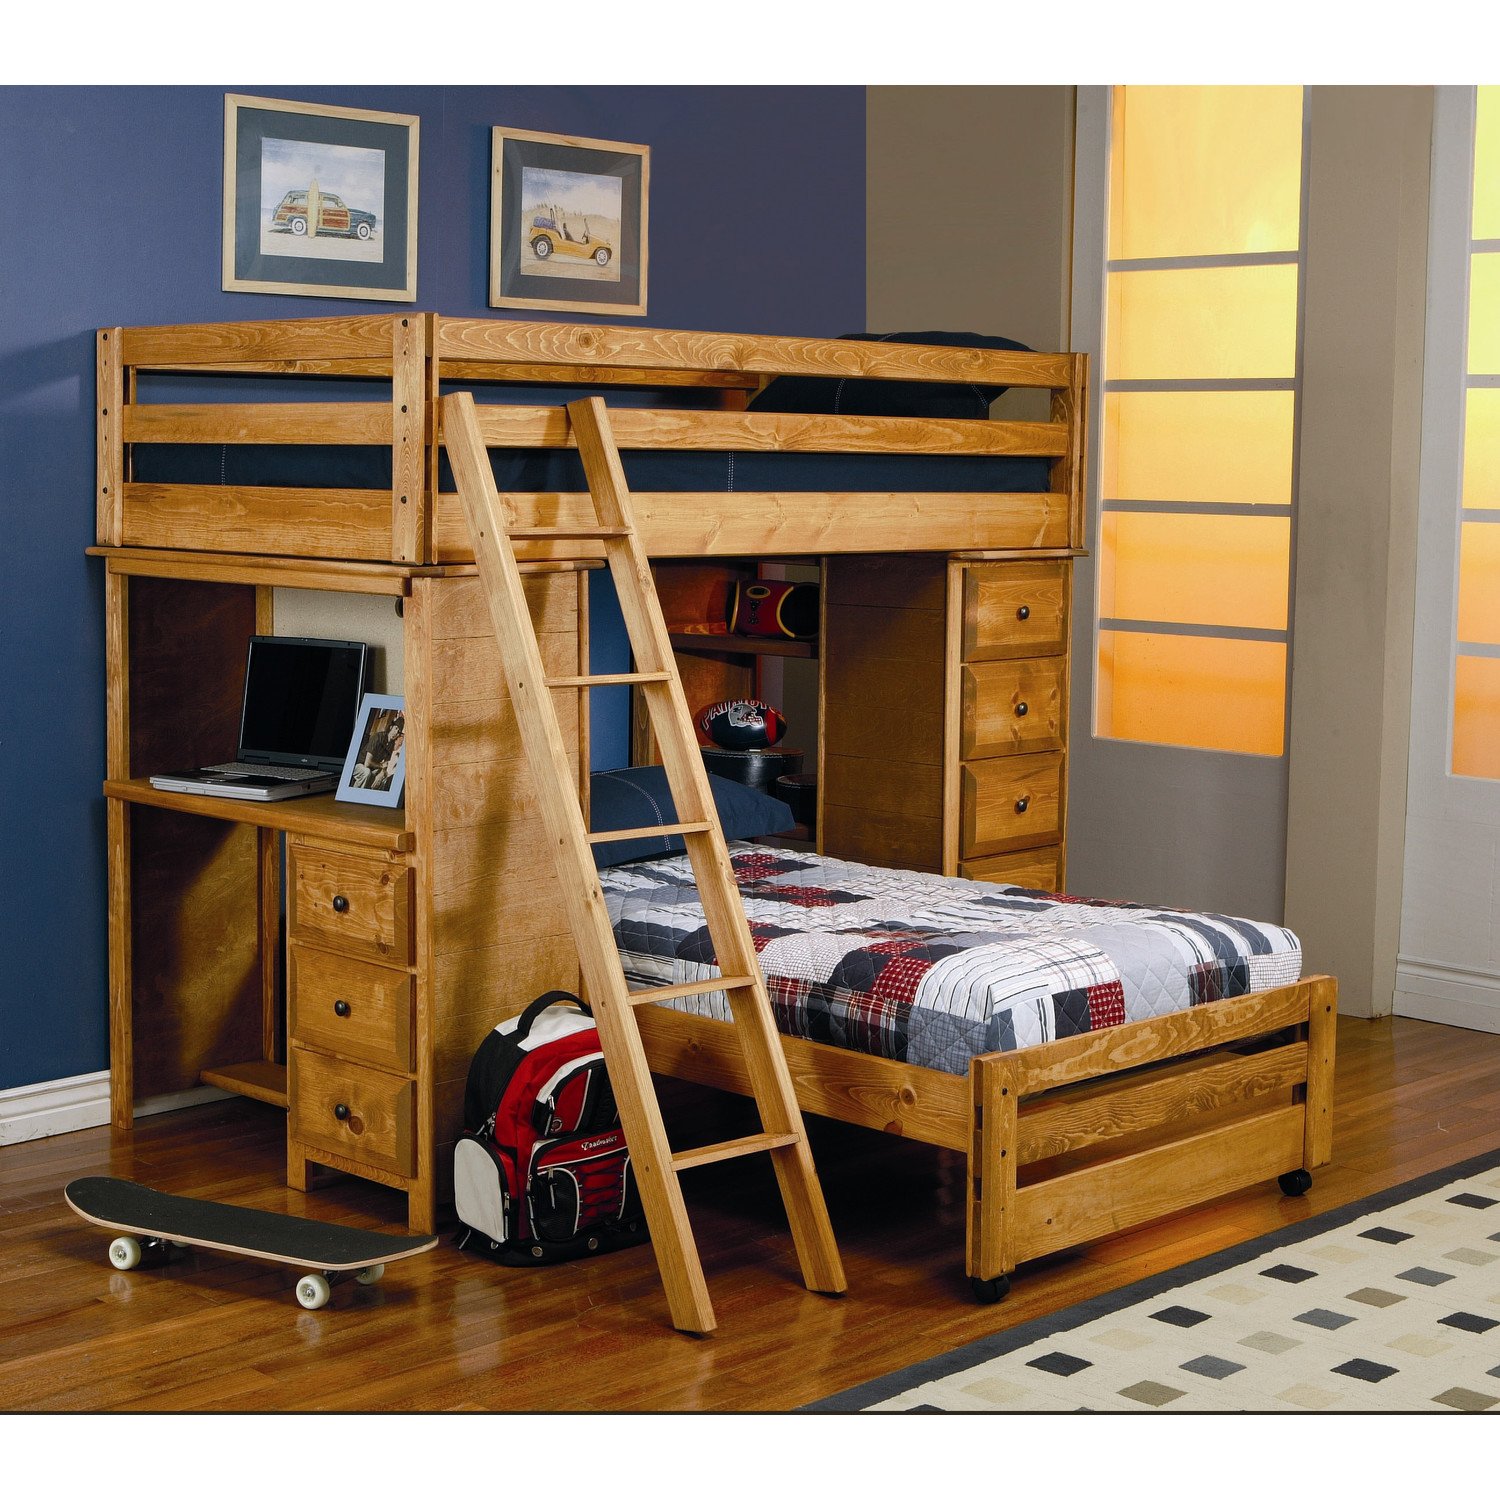 Bunk Beds with Desks  HomesFeed